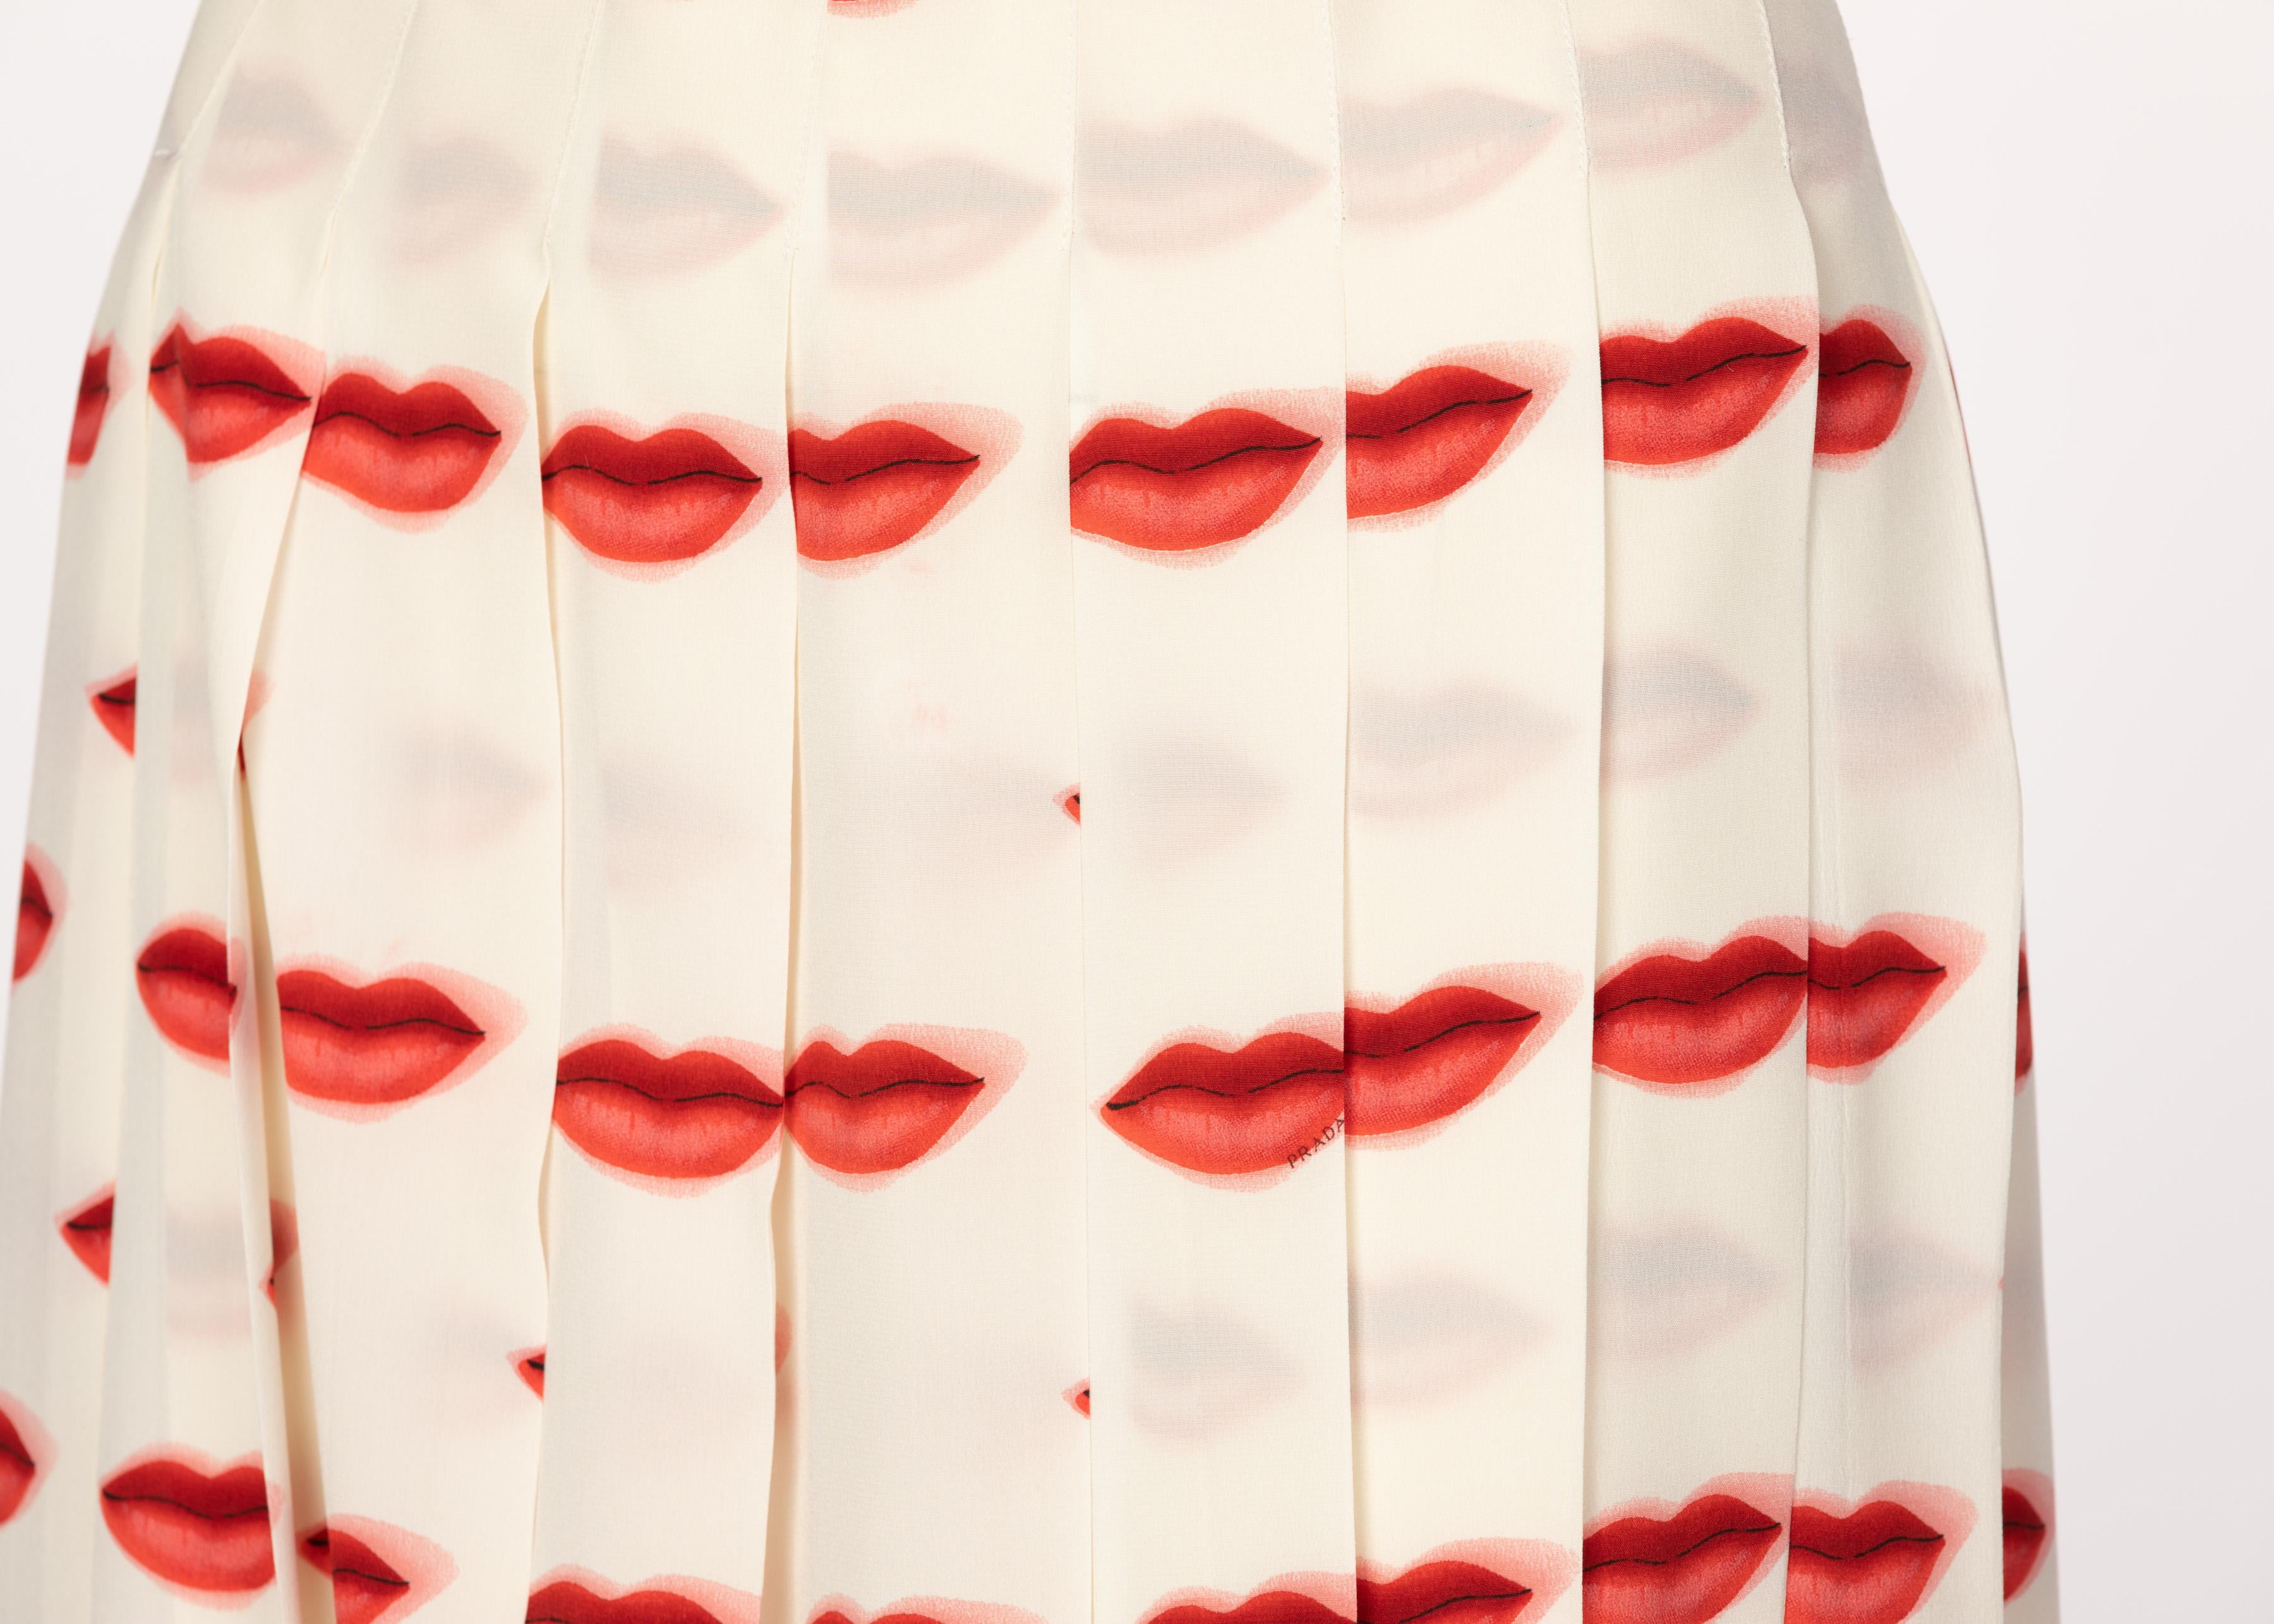 Iconic Prada Red Lip Print Pleated Skirt, Spring 2000 1